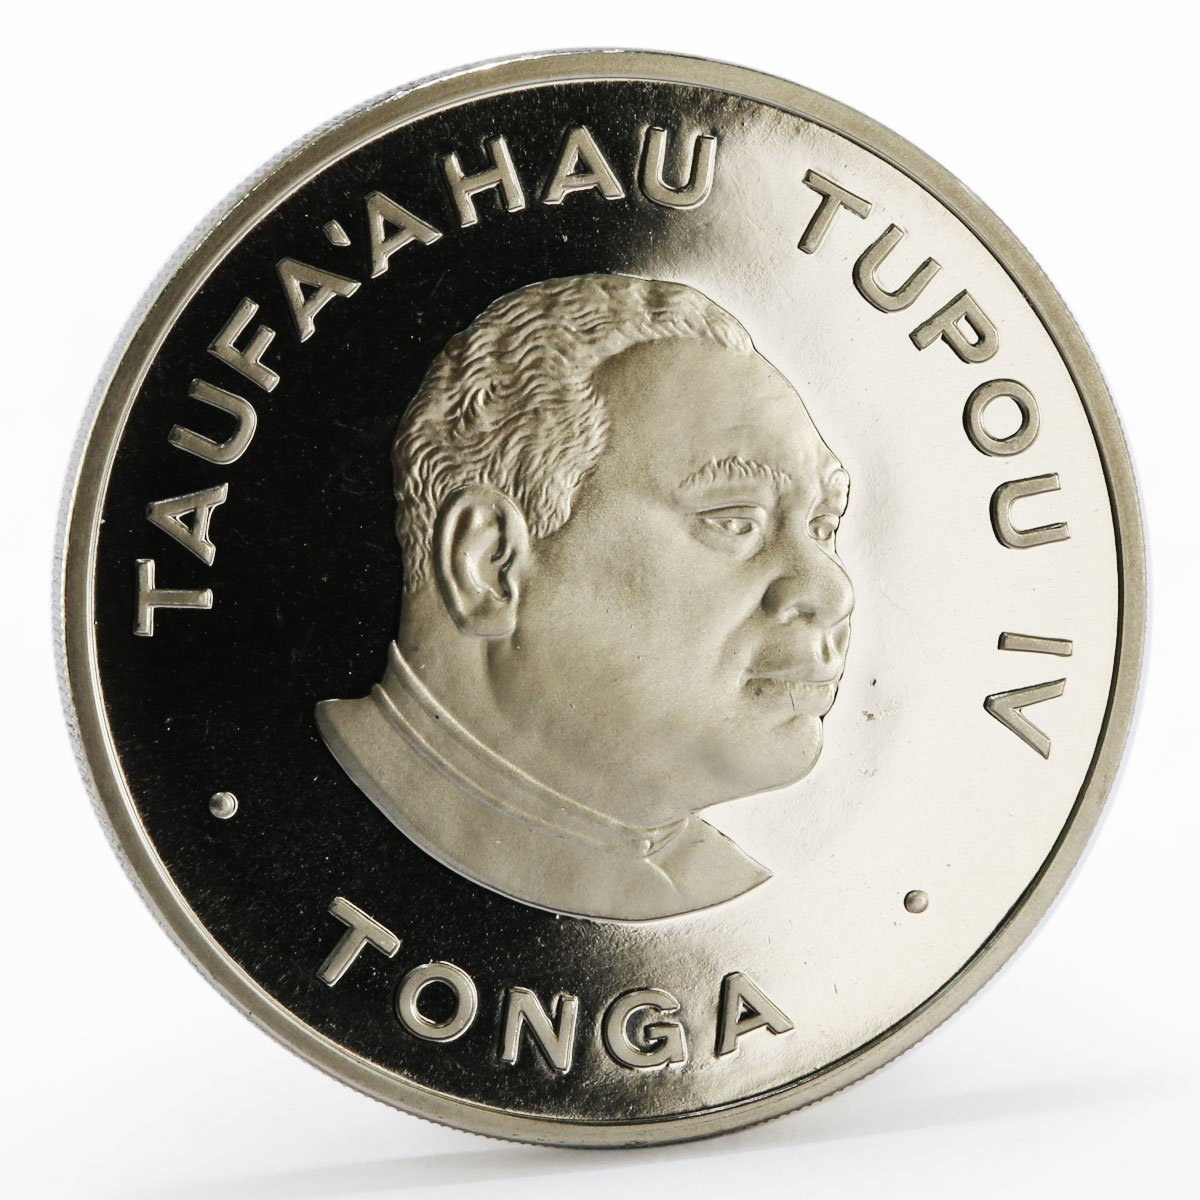 Tonga 5 paanga International Games series Judo proof nickel coin 1984